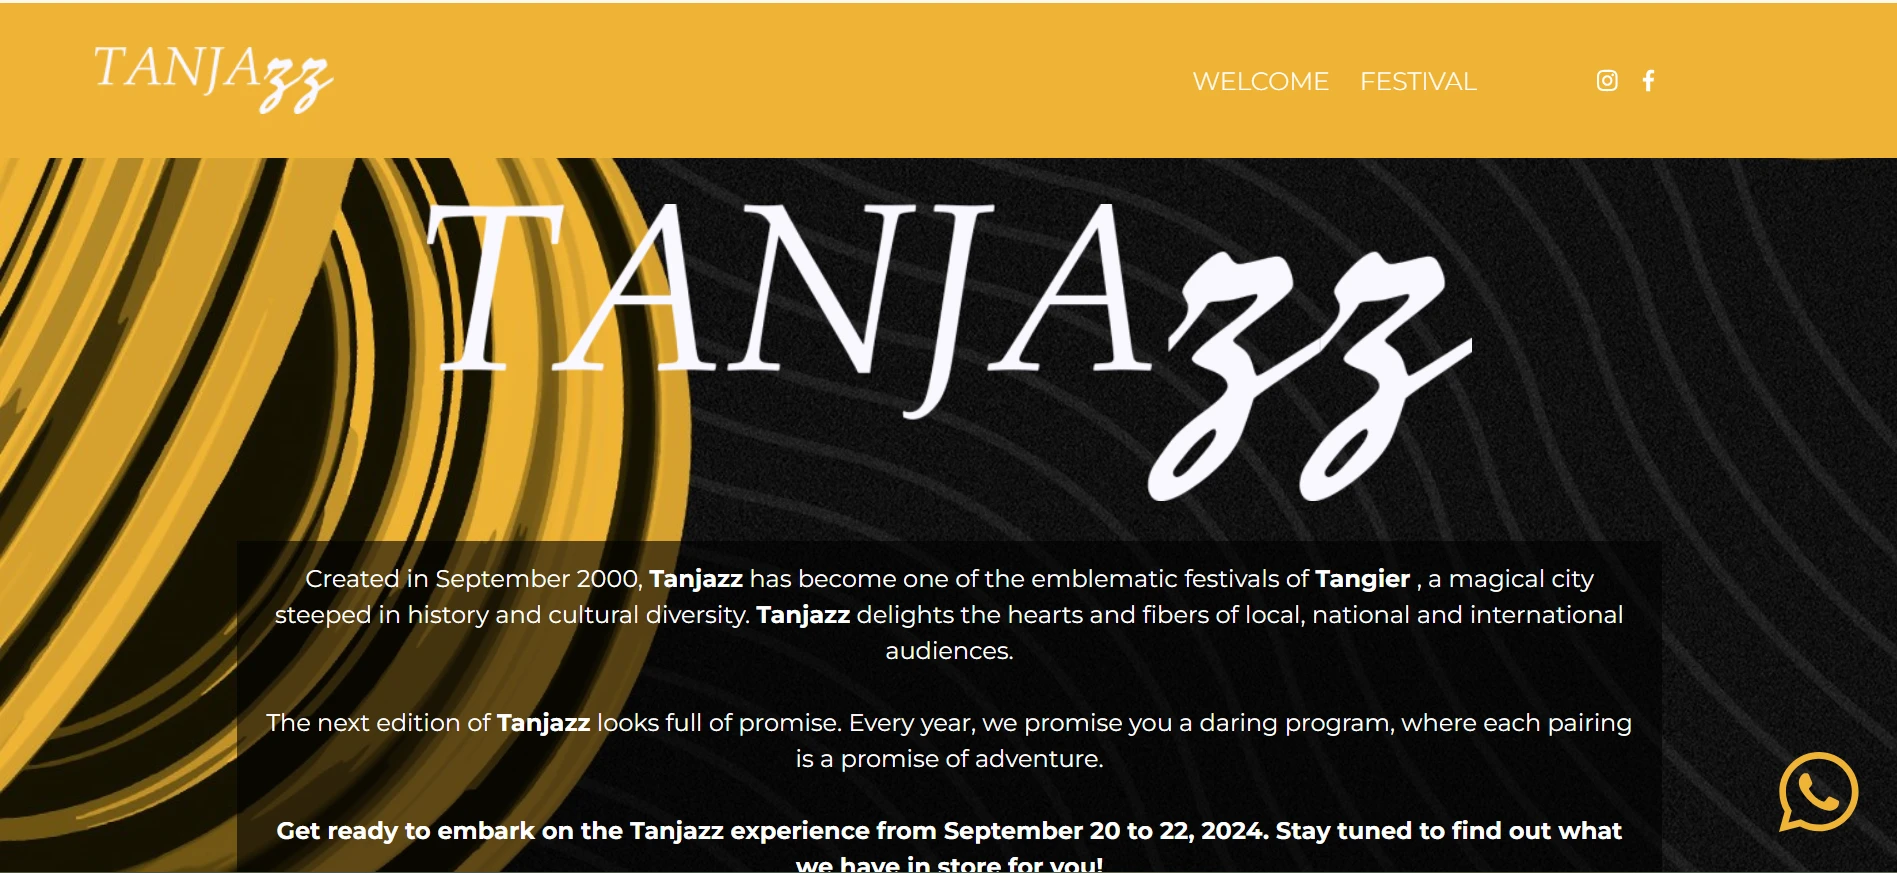 TanJazz Festival's official website